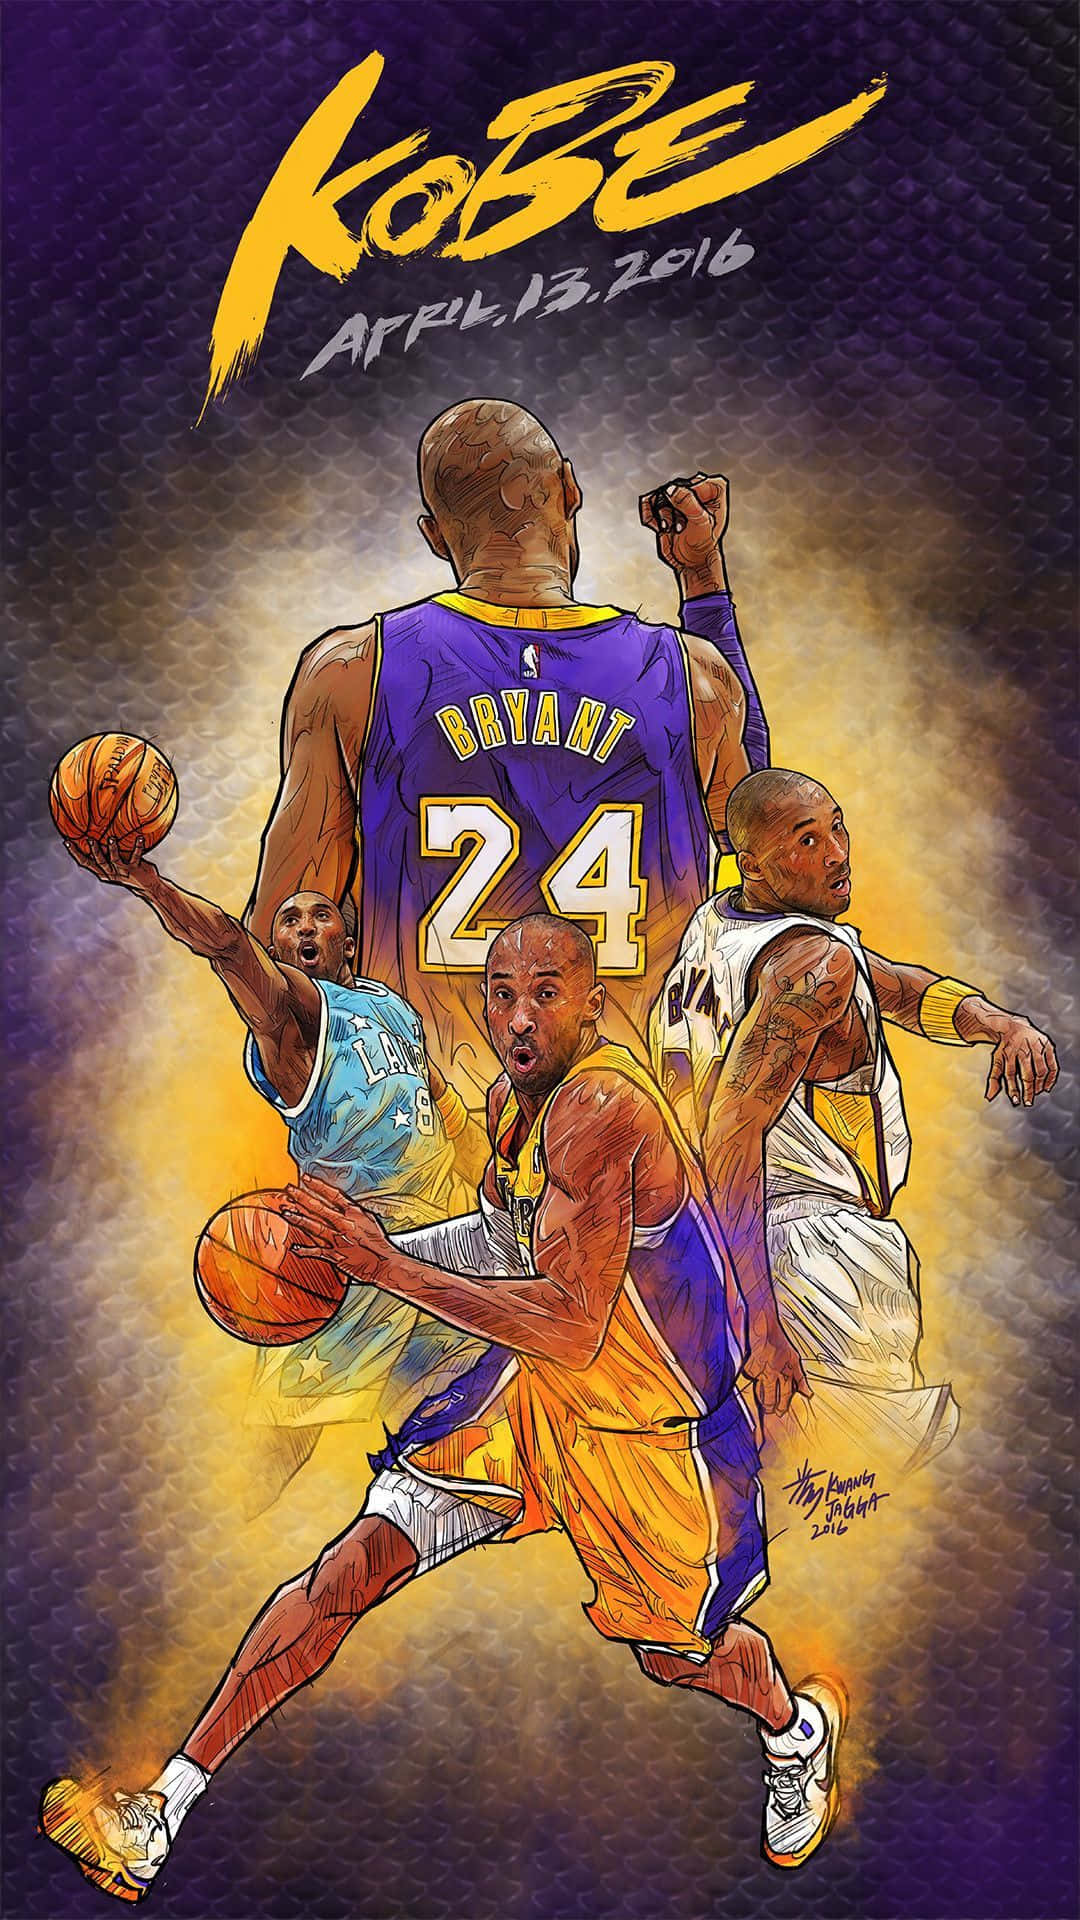 Legendarisknba-stjerne, Kobe Bryant.